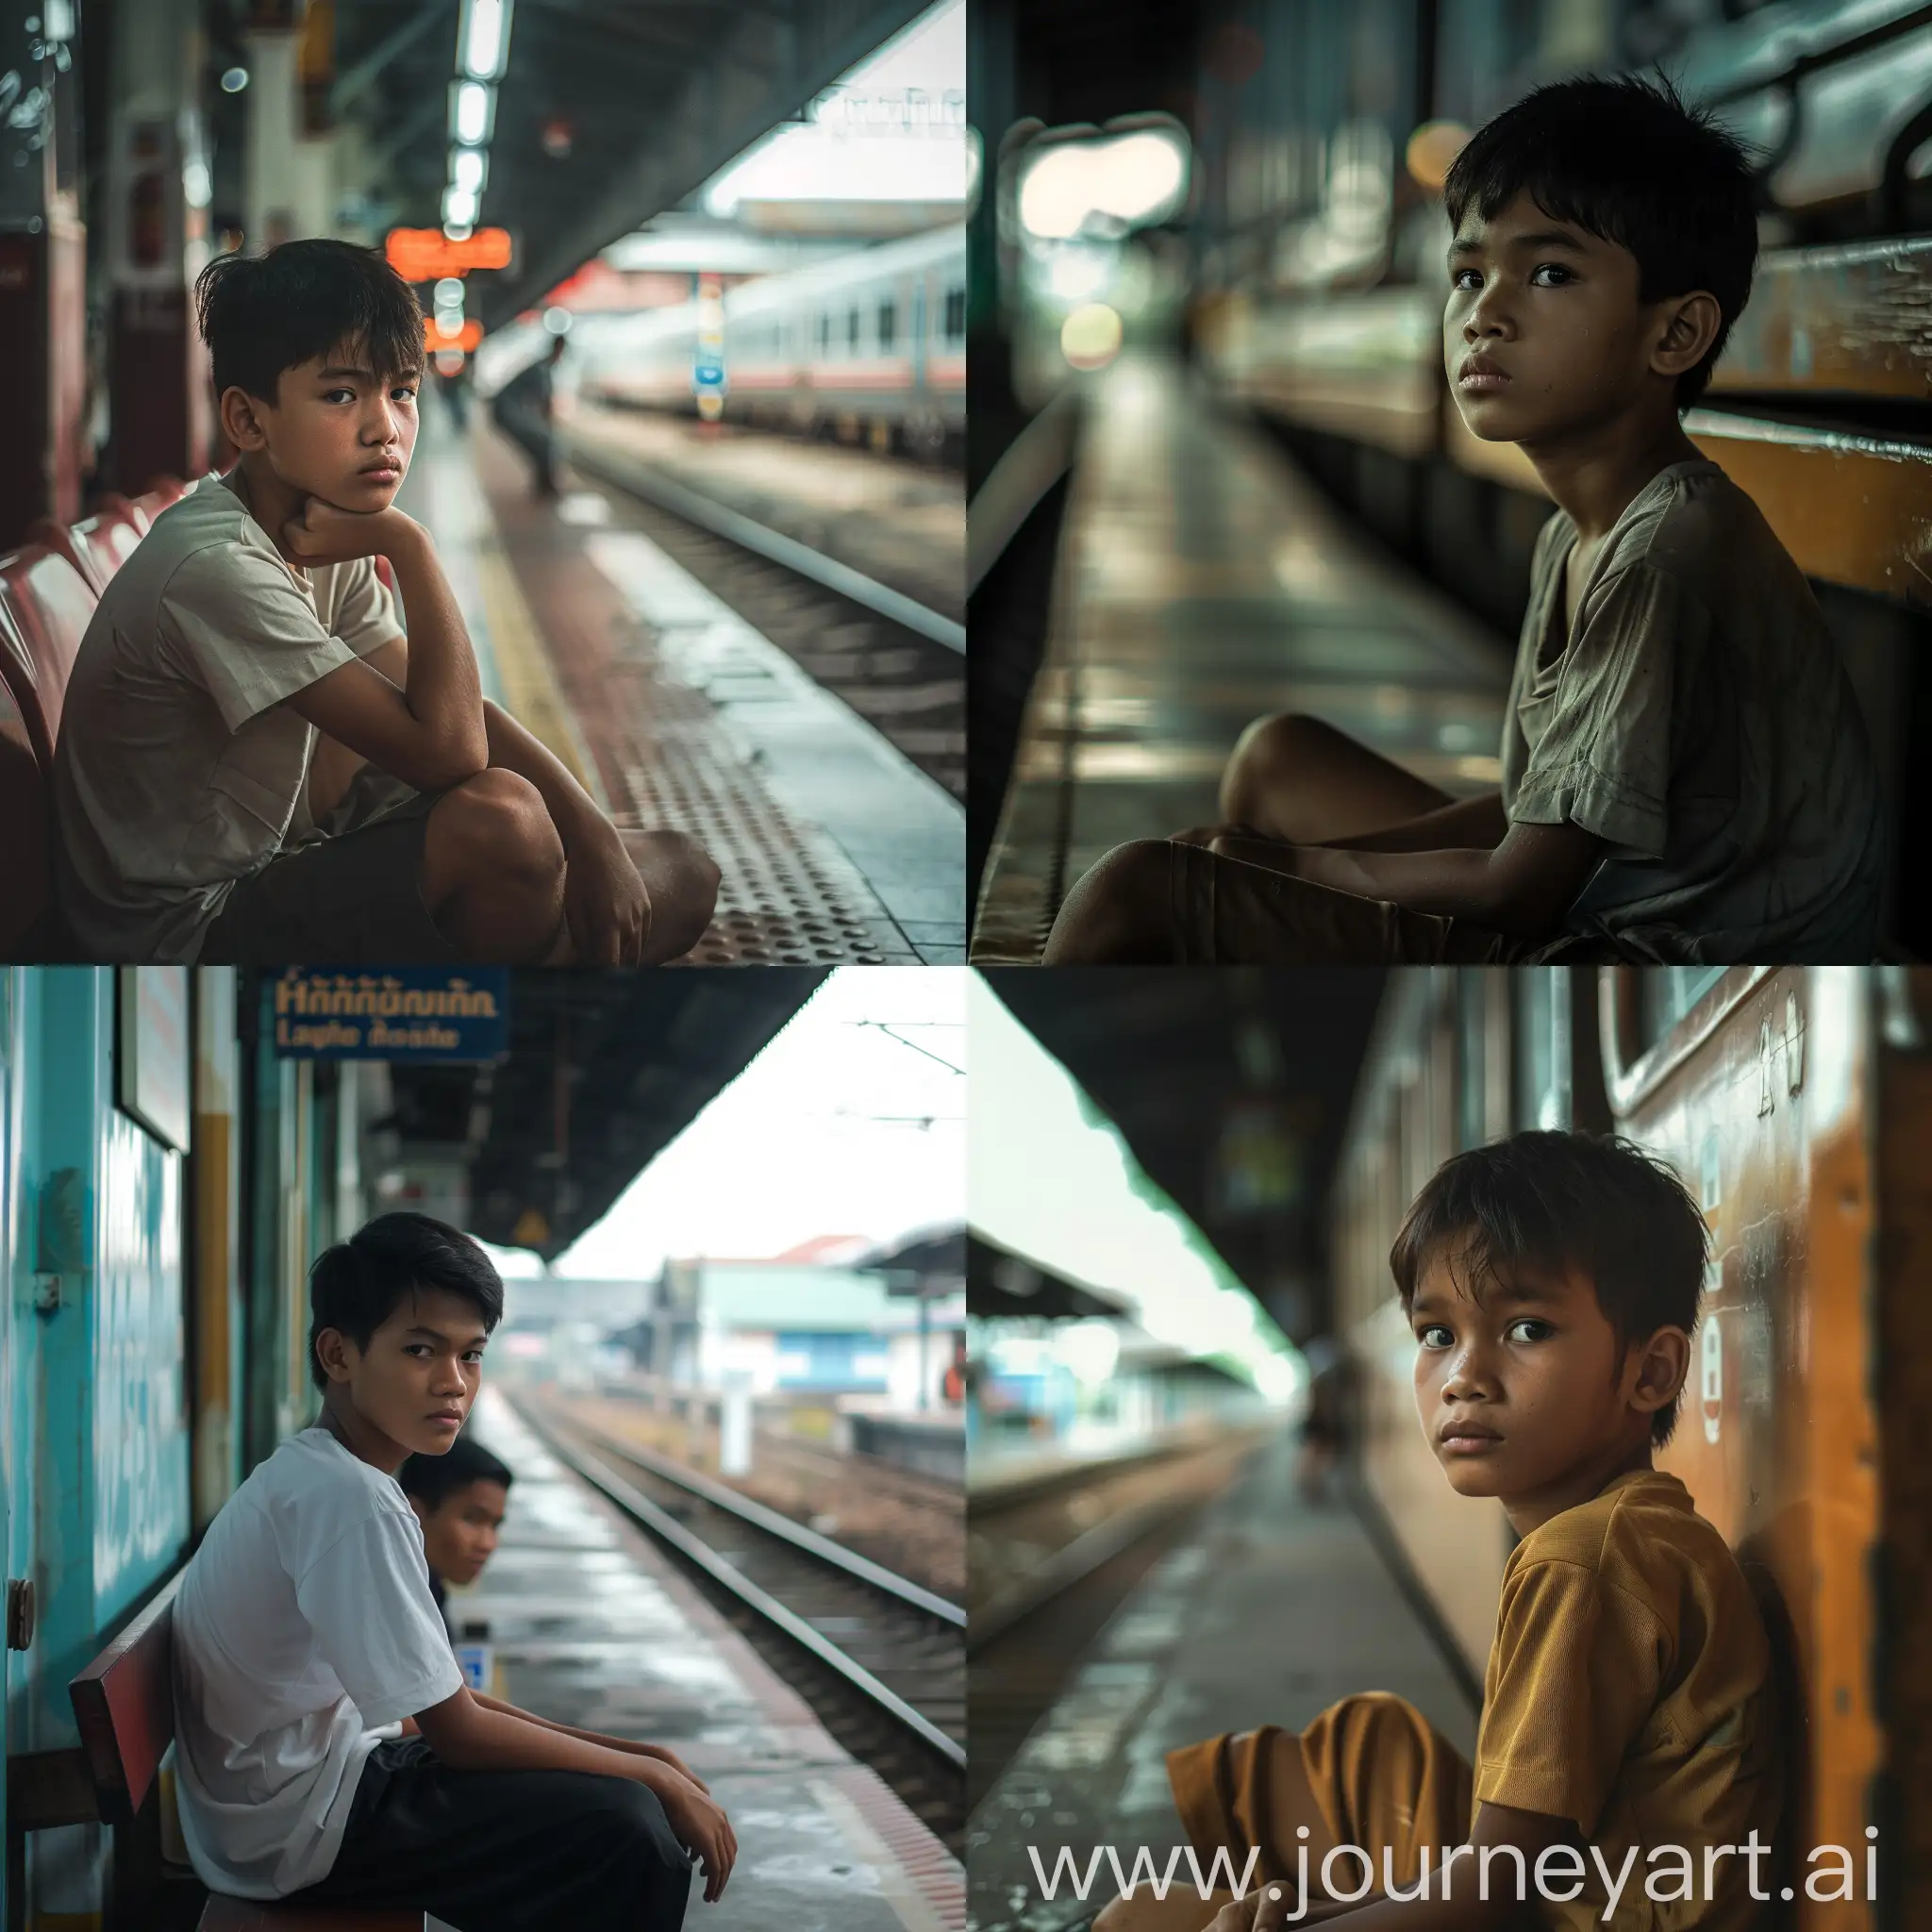 handsom boy 25year old,thailand face, wearing batrain,sitting waiting train at the javanese train station,photo realisti,Hd ultra,sharp